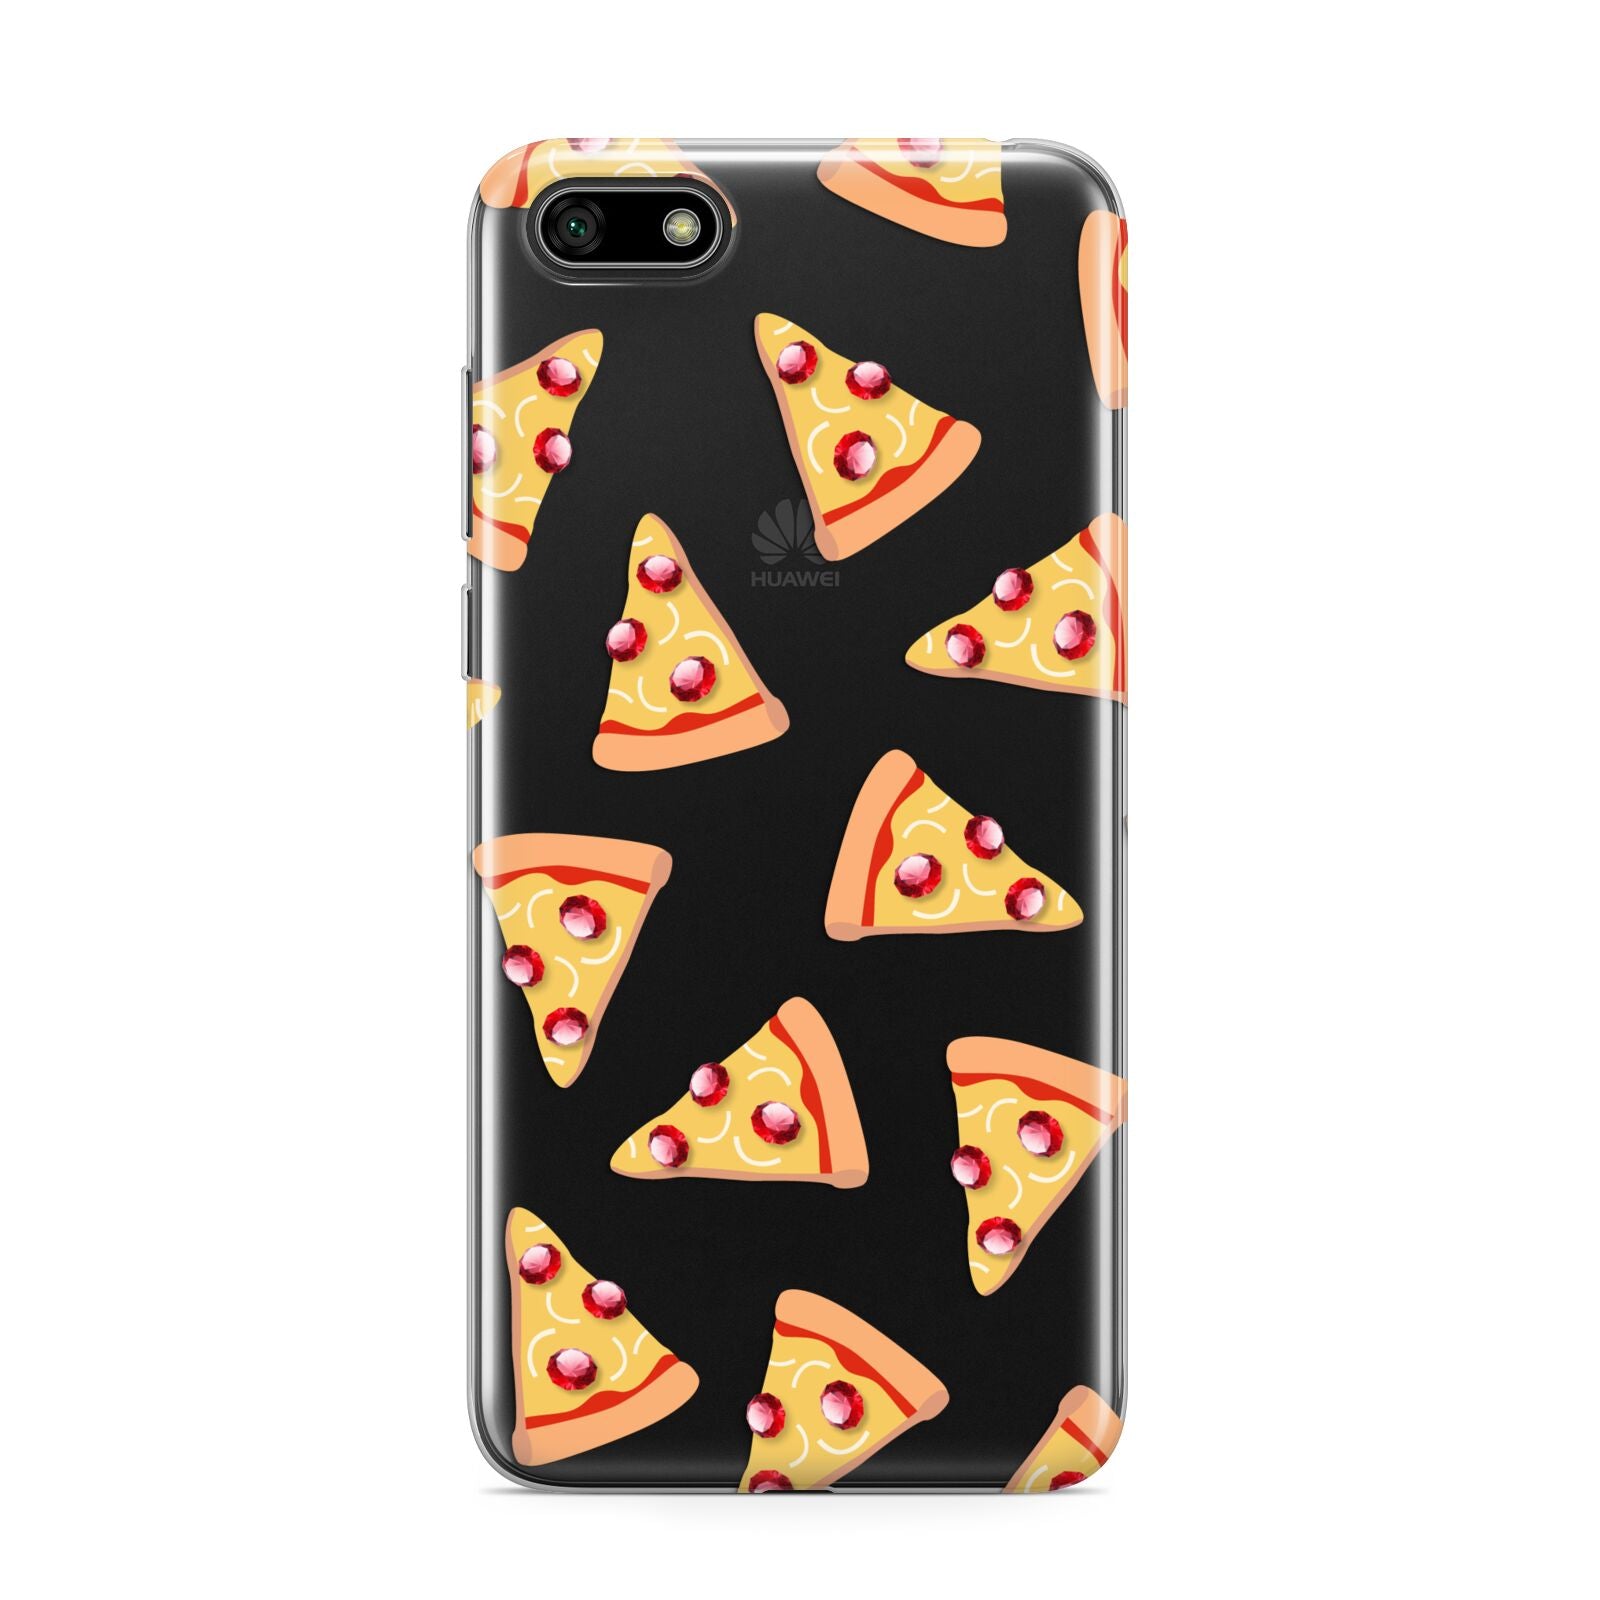 Rubies on Cartoon Pizza Slices Huawei Y5 Prime 2018 Phone Case